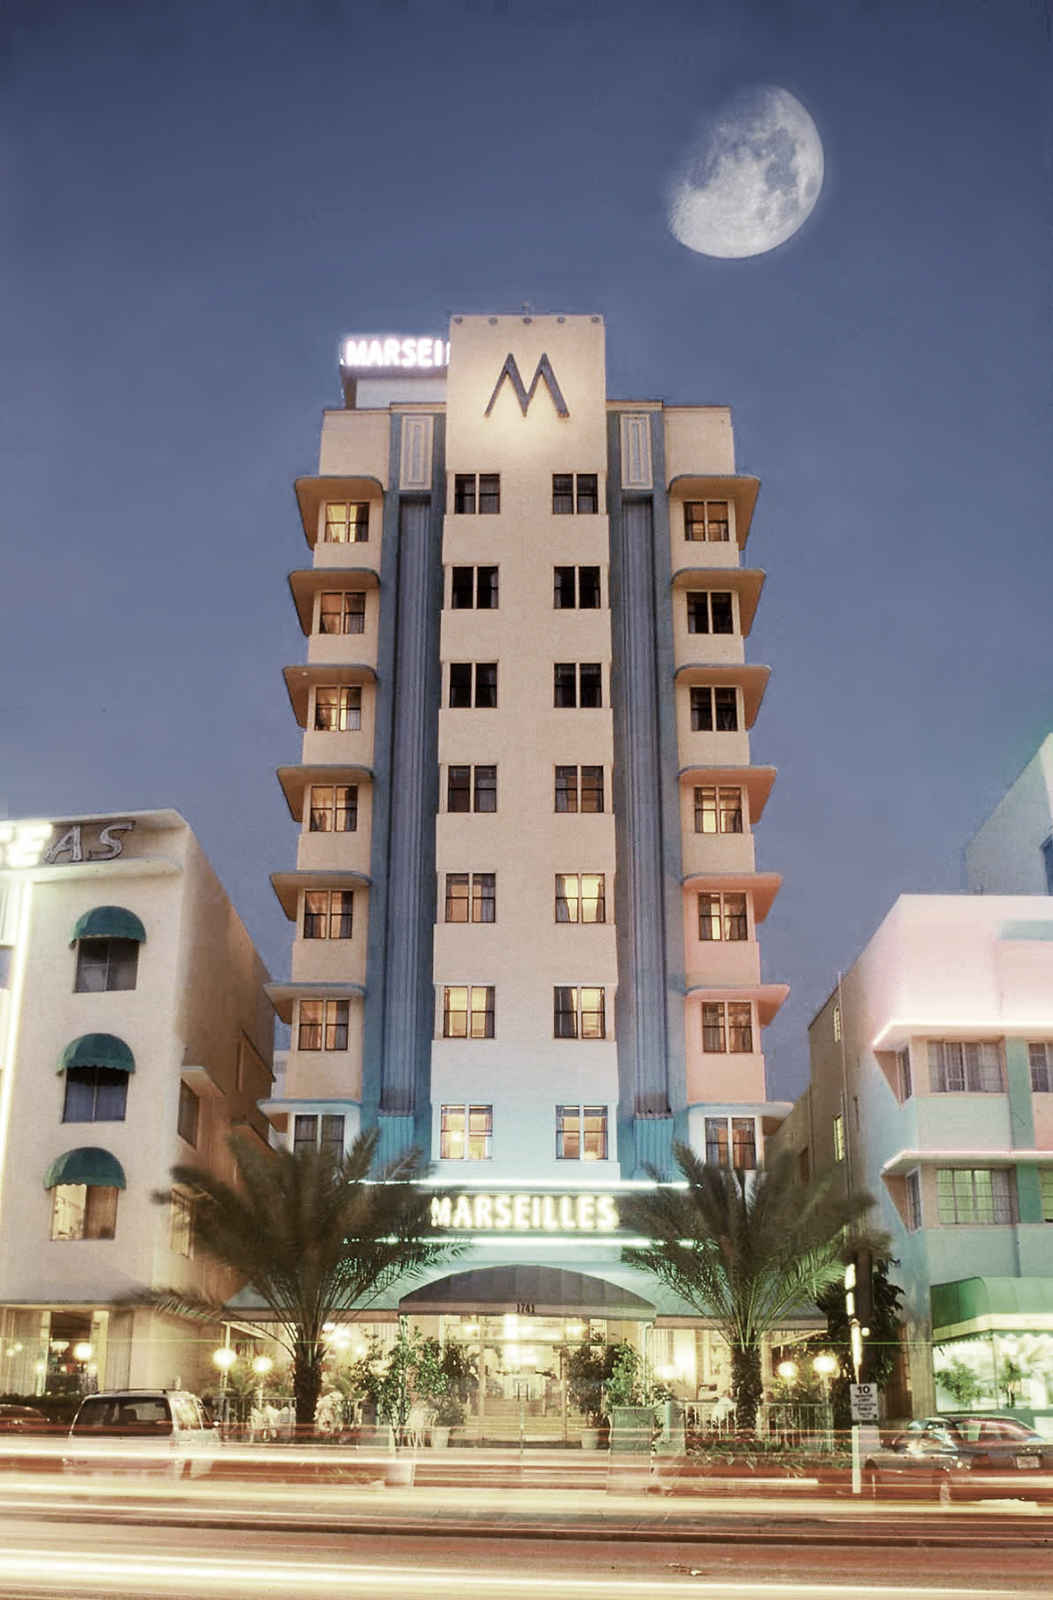 Marseilles Hotel Miami